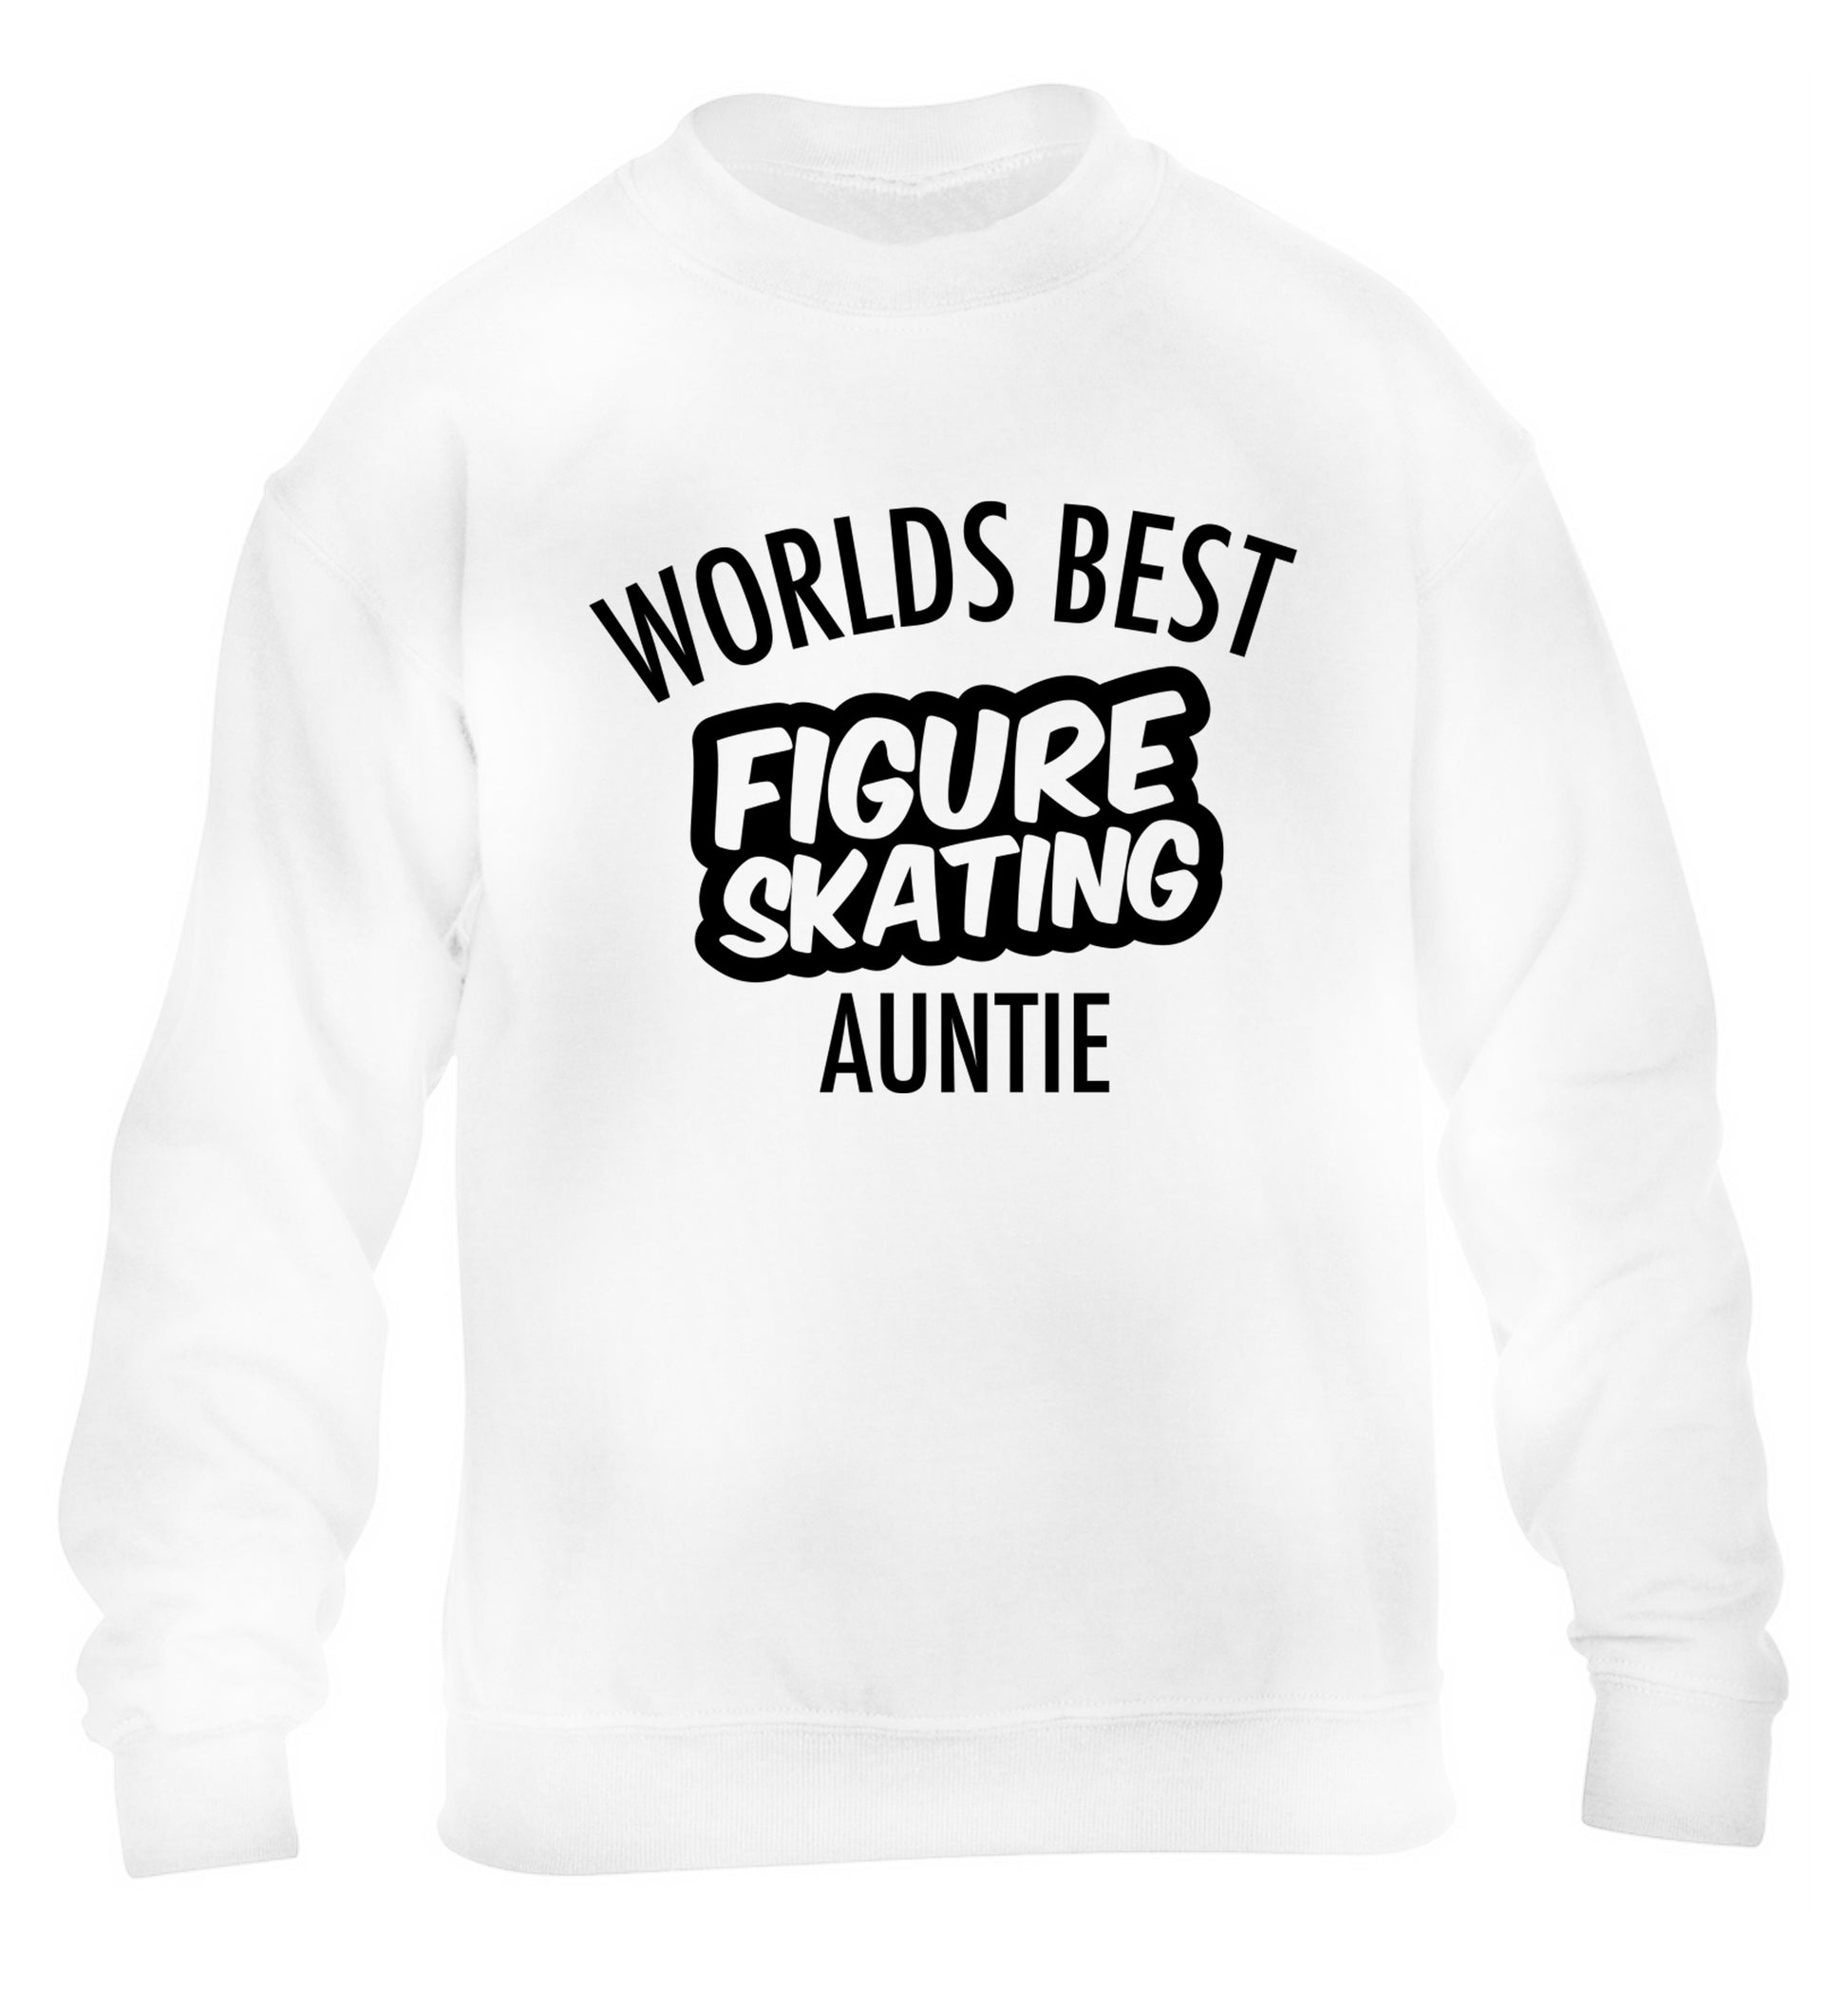 Worlds best figure skating auntie children's white sweater 12-14 Years